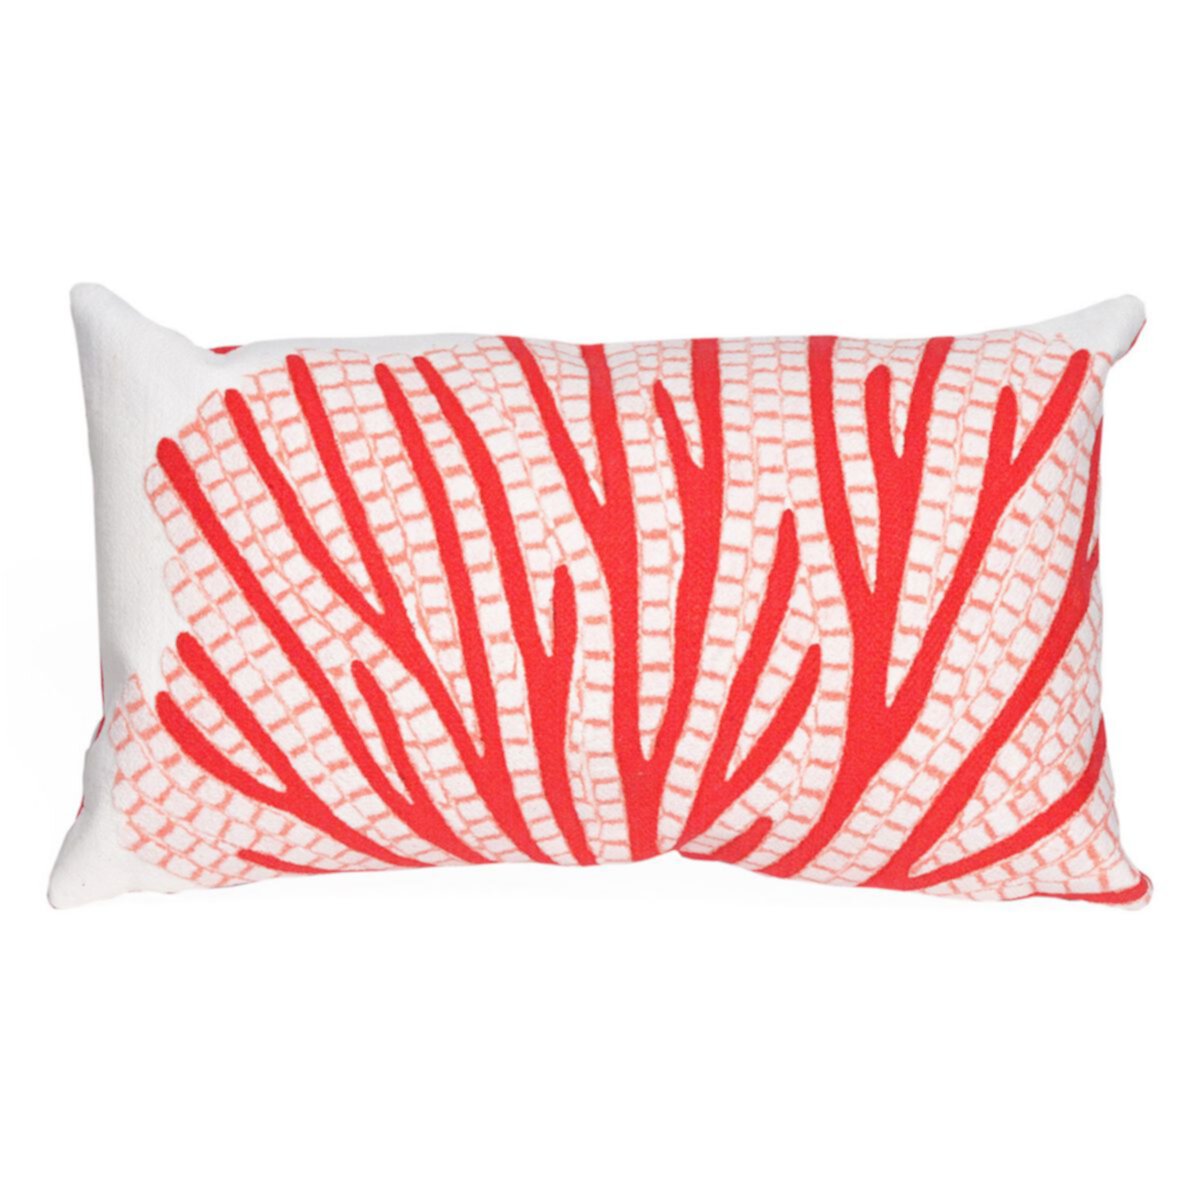 Liora Manne Visions III Coral Fan Продолговатая декоративная подушка для дома и улицы Liora Manne